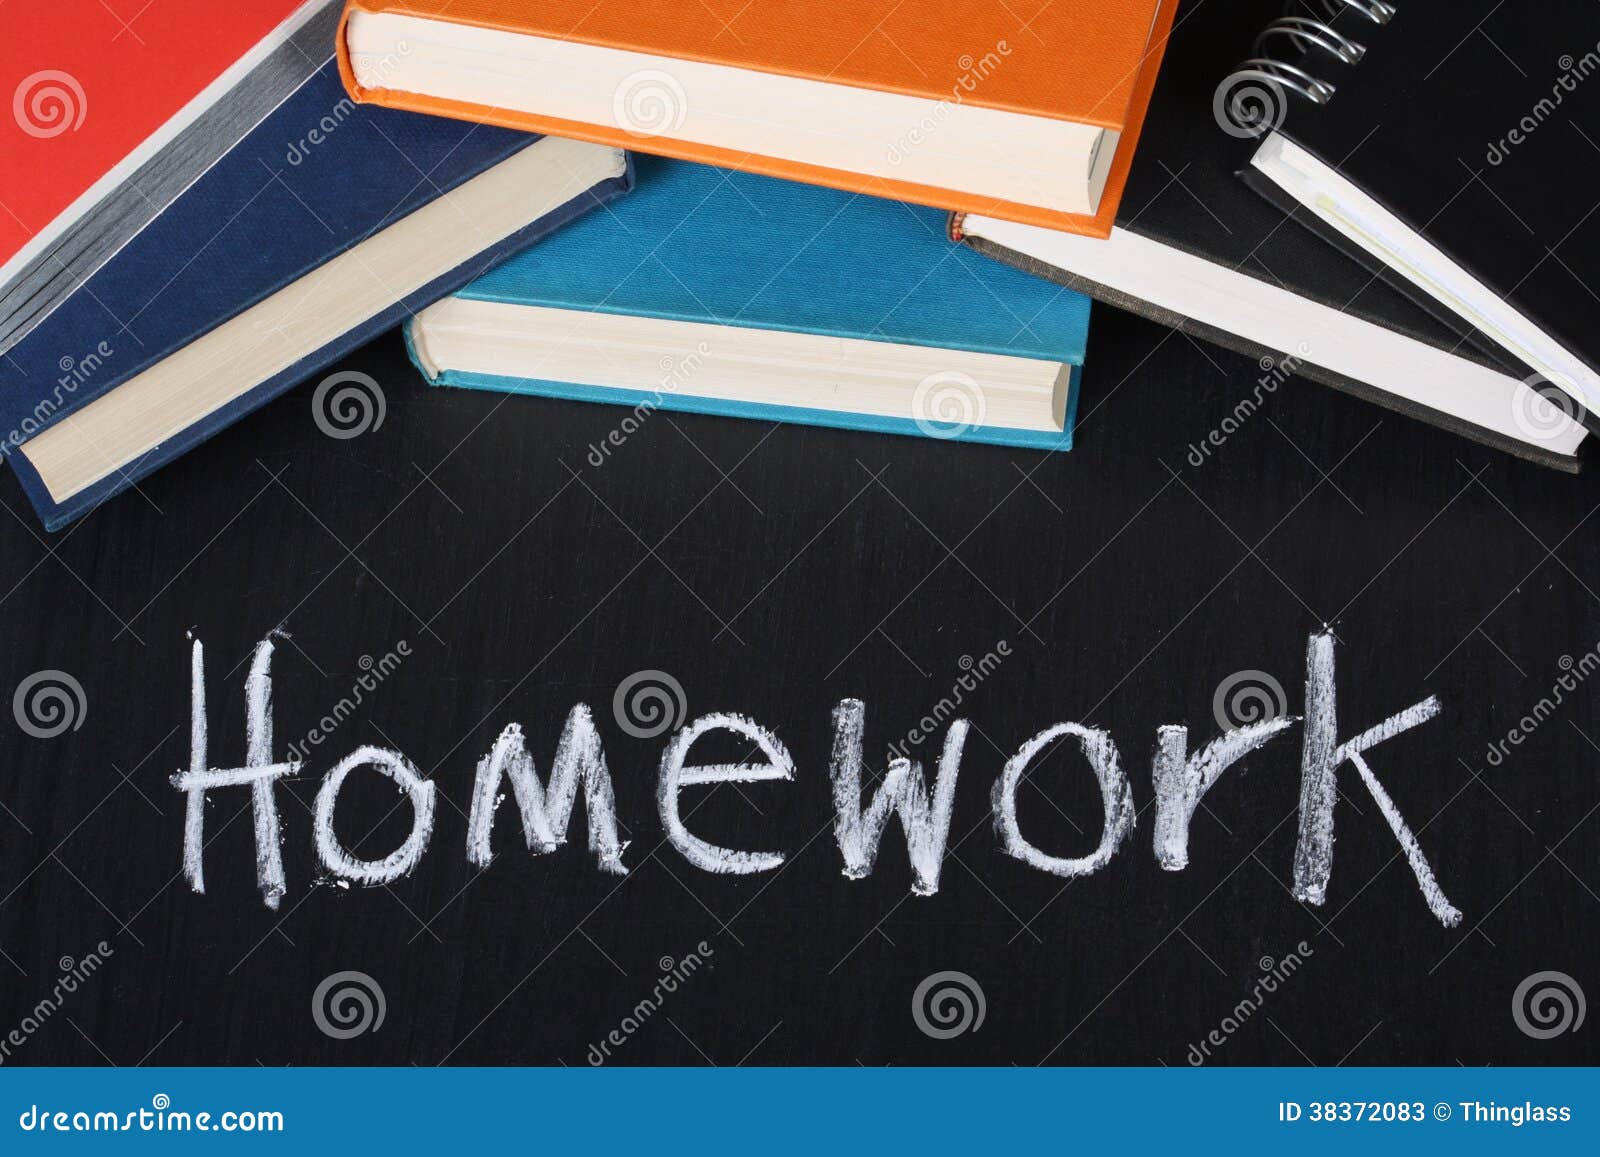 textbooks and homework